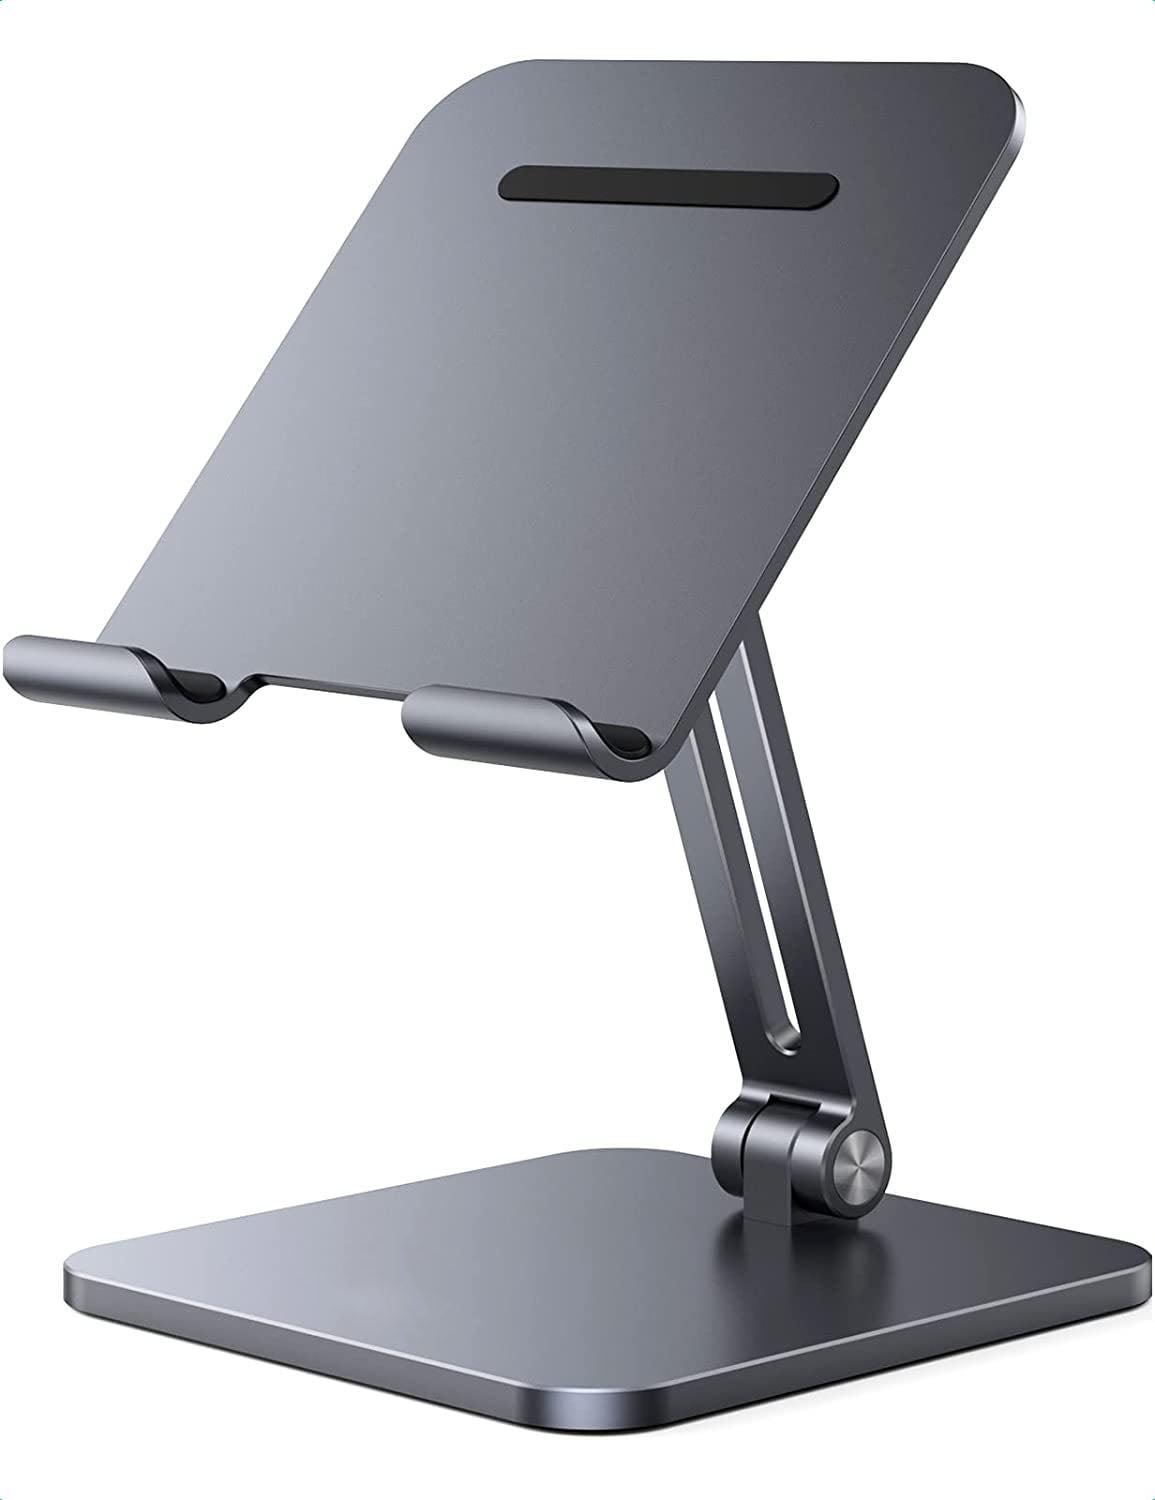 Arm Extension Table  Desktop Stand Mount  For iPad Air 2 iPad 4/3/2 iPad mini 2 